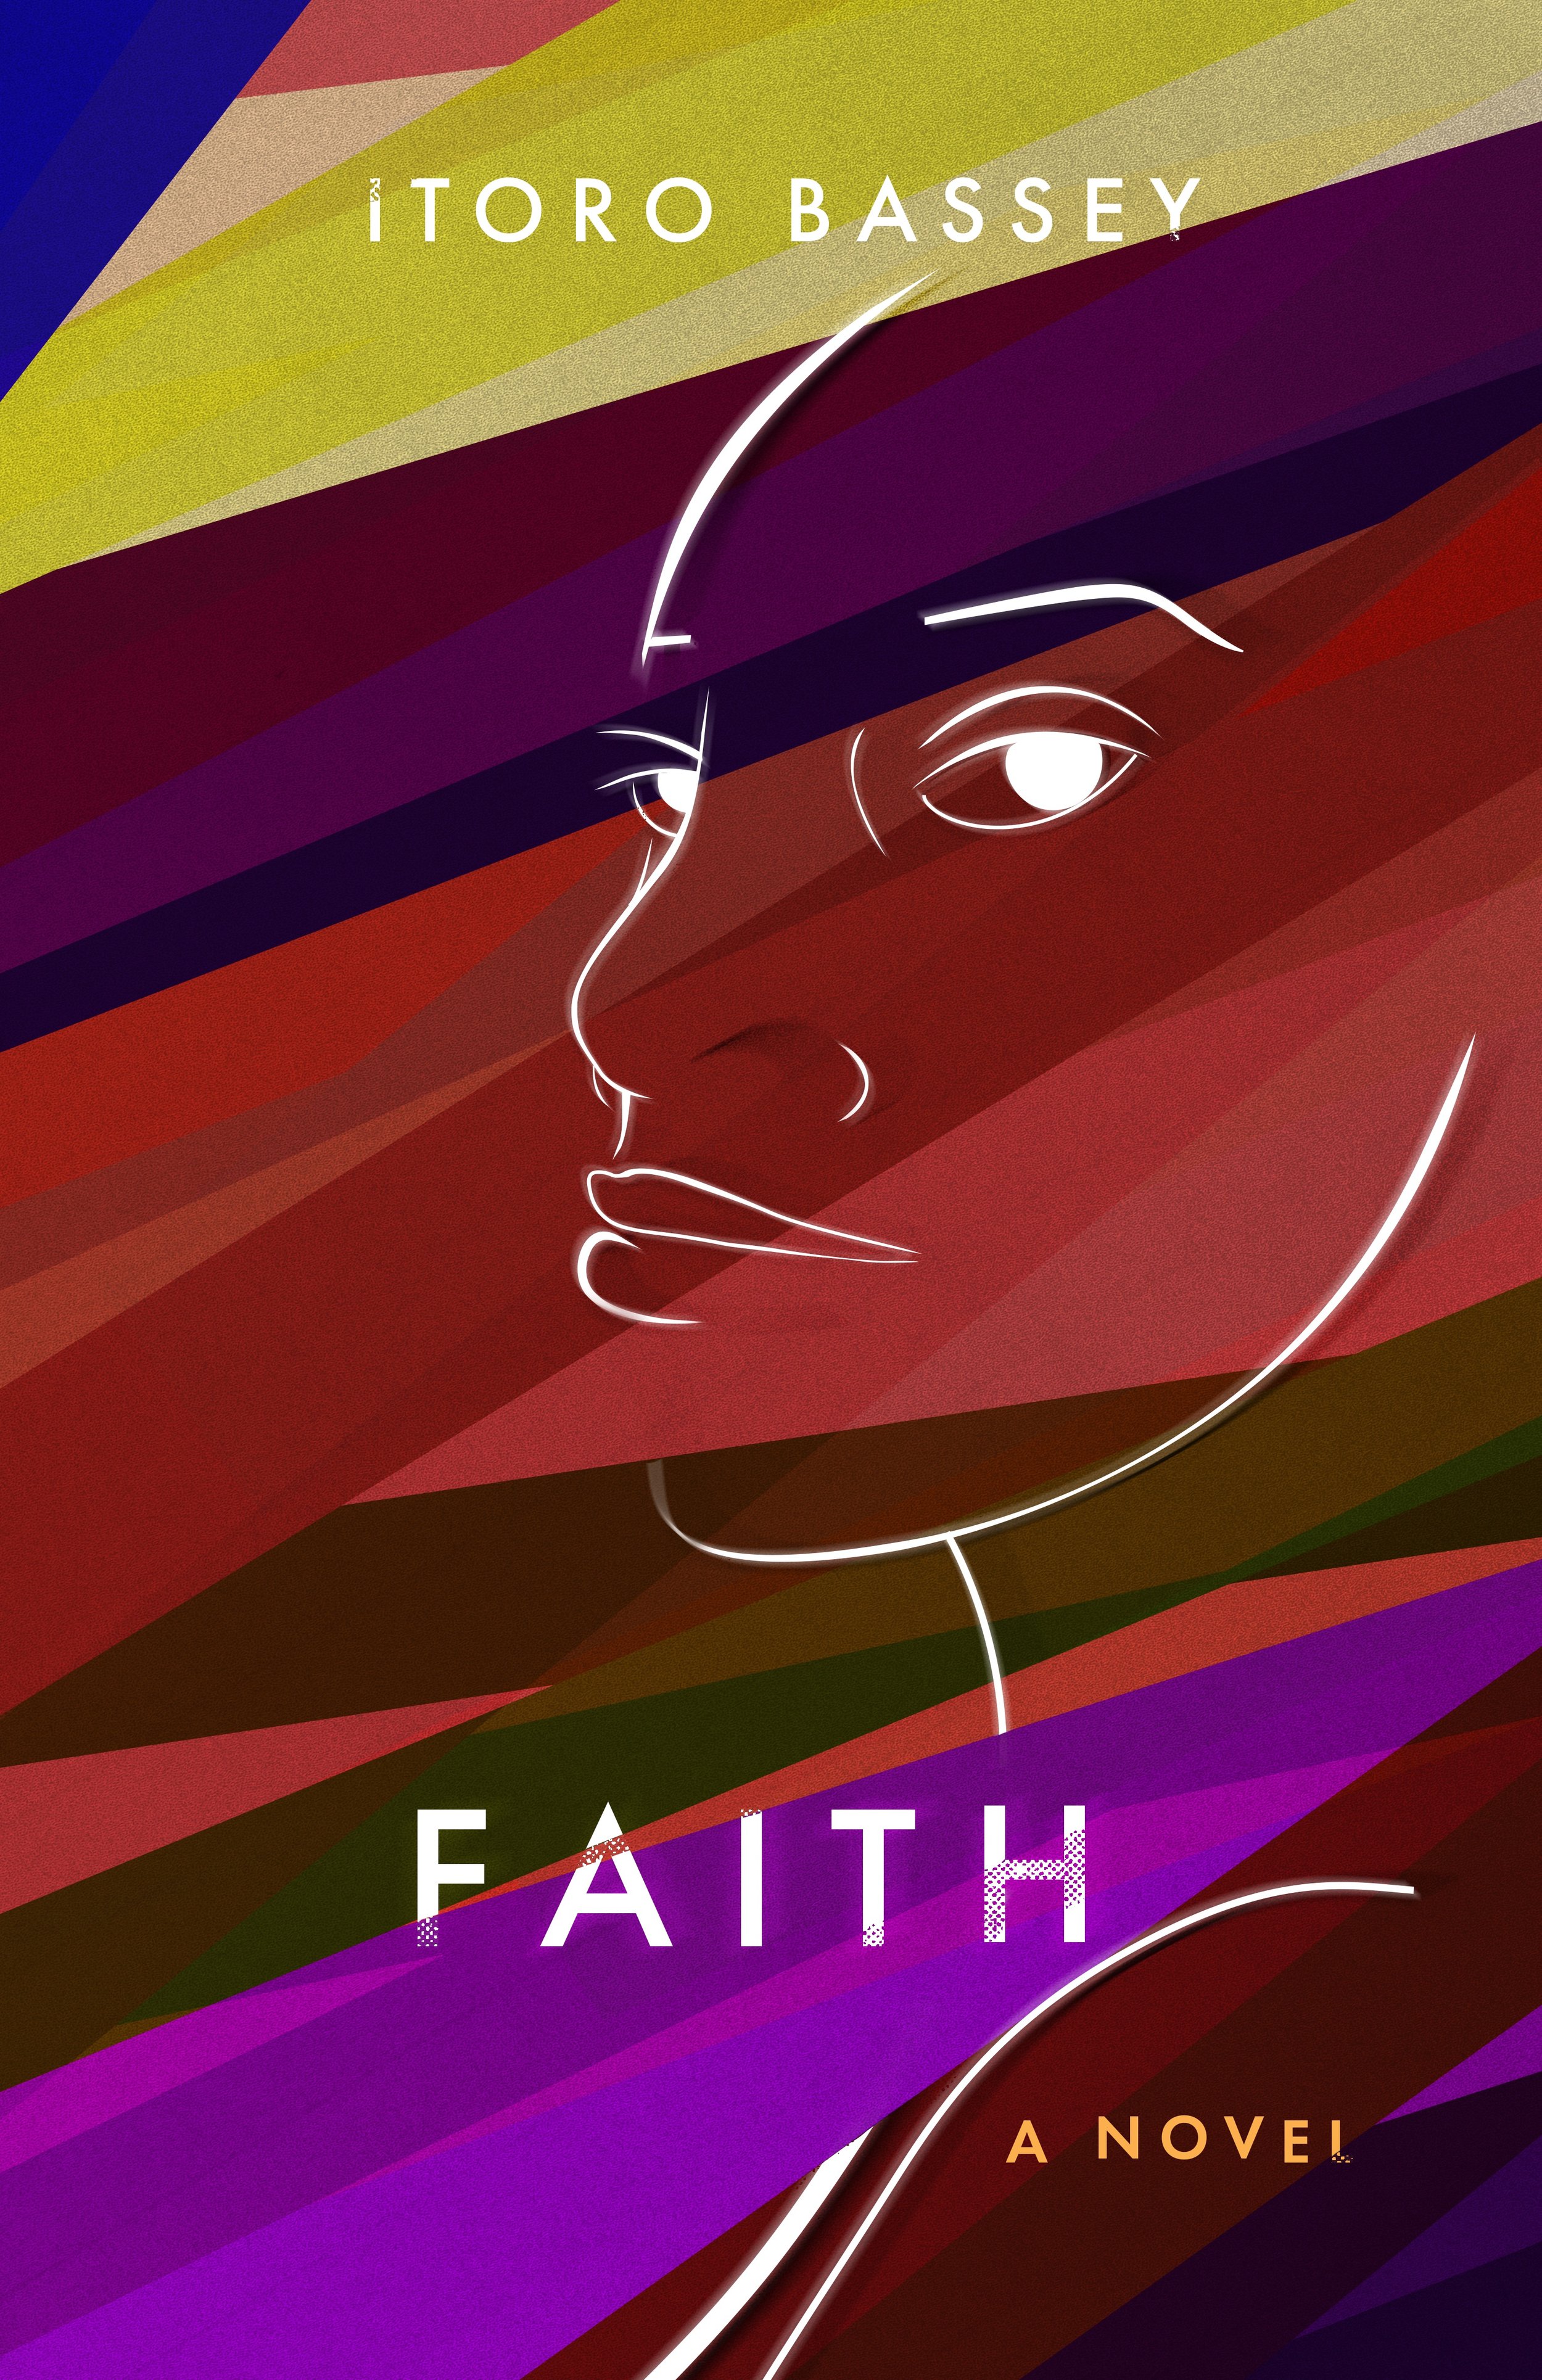 Faith, a novel by Itoro Bassey